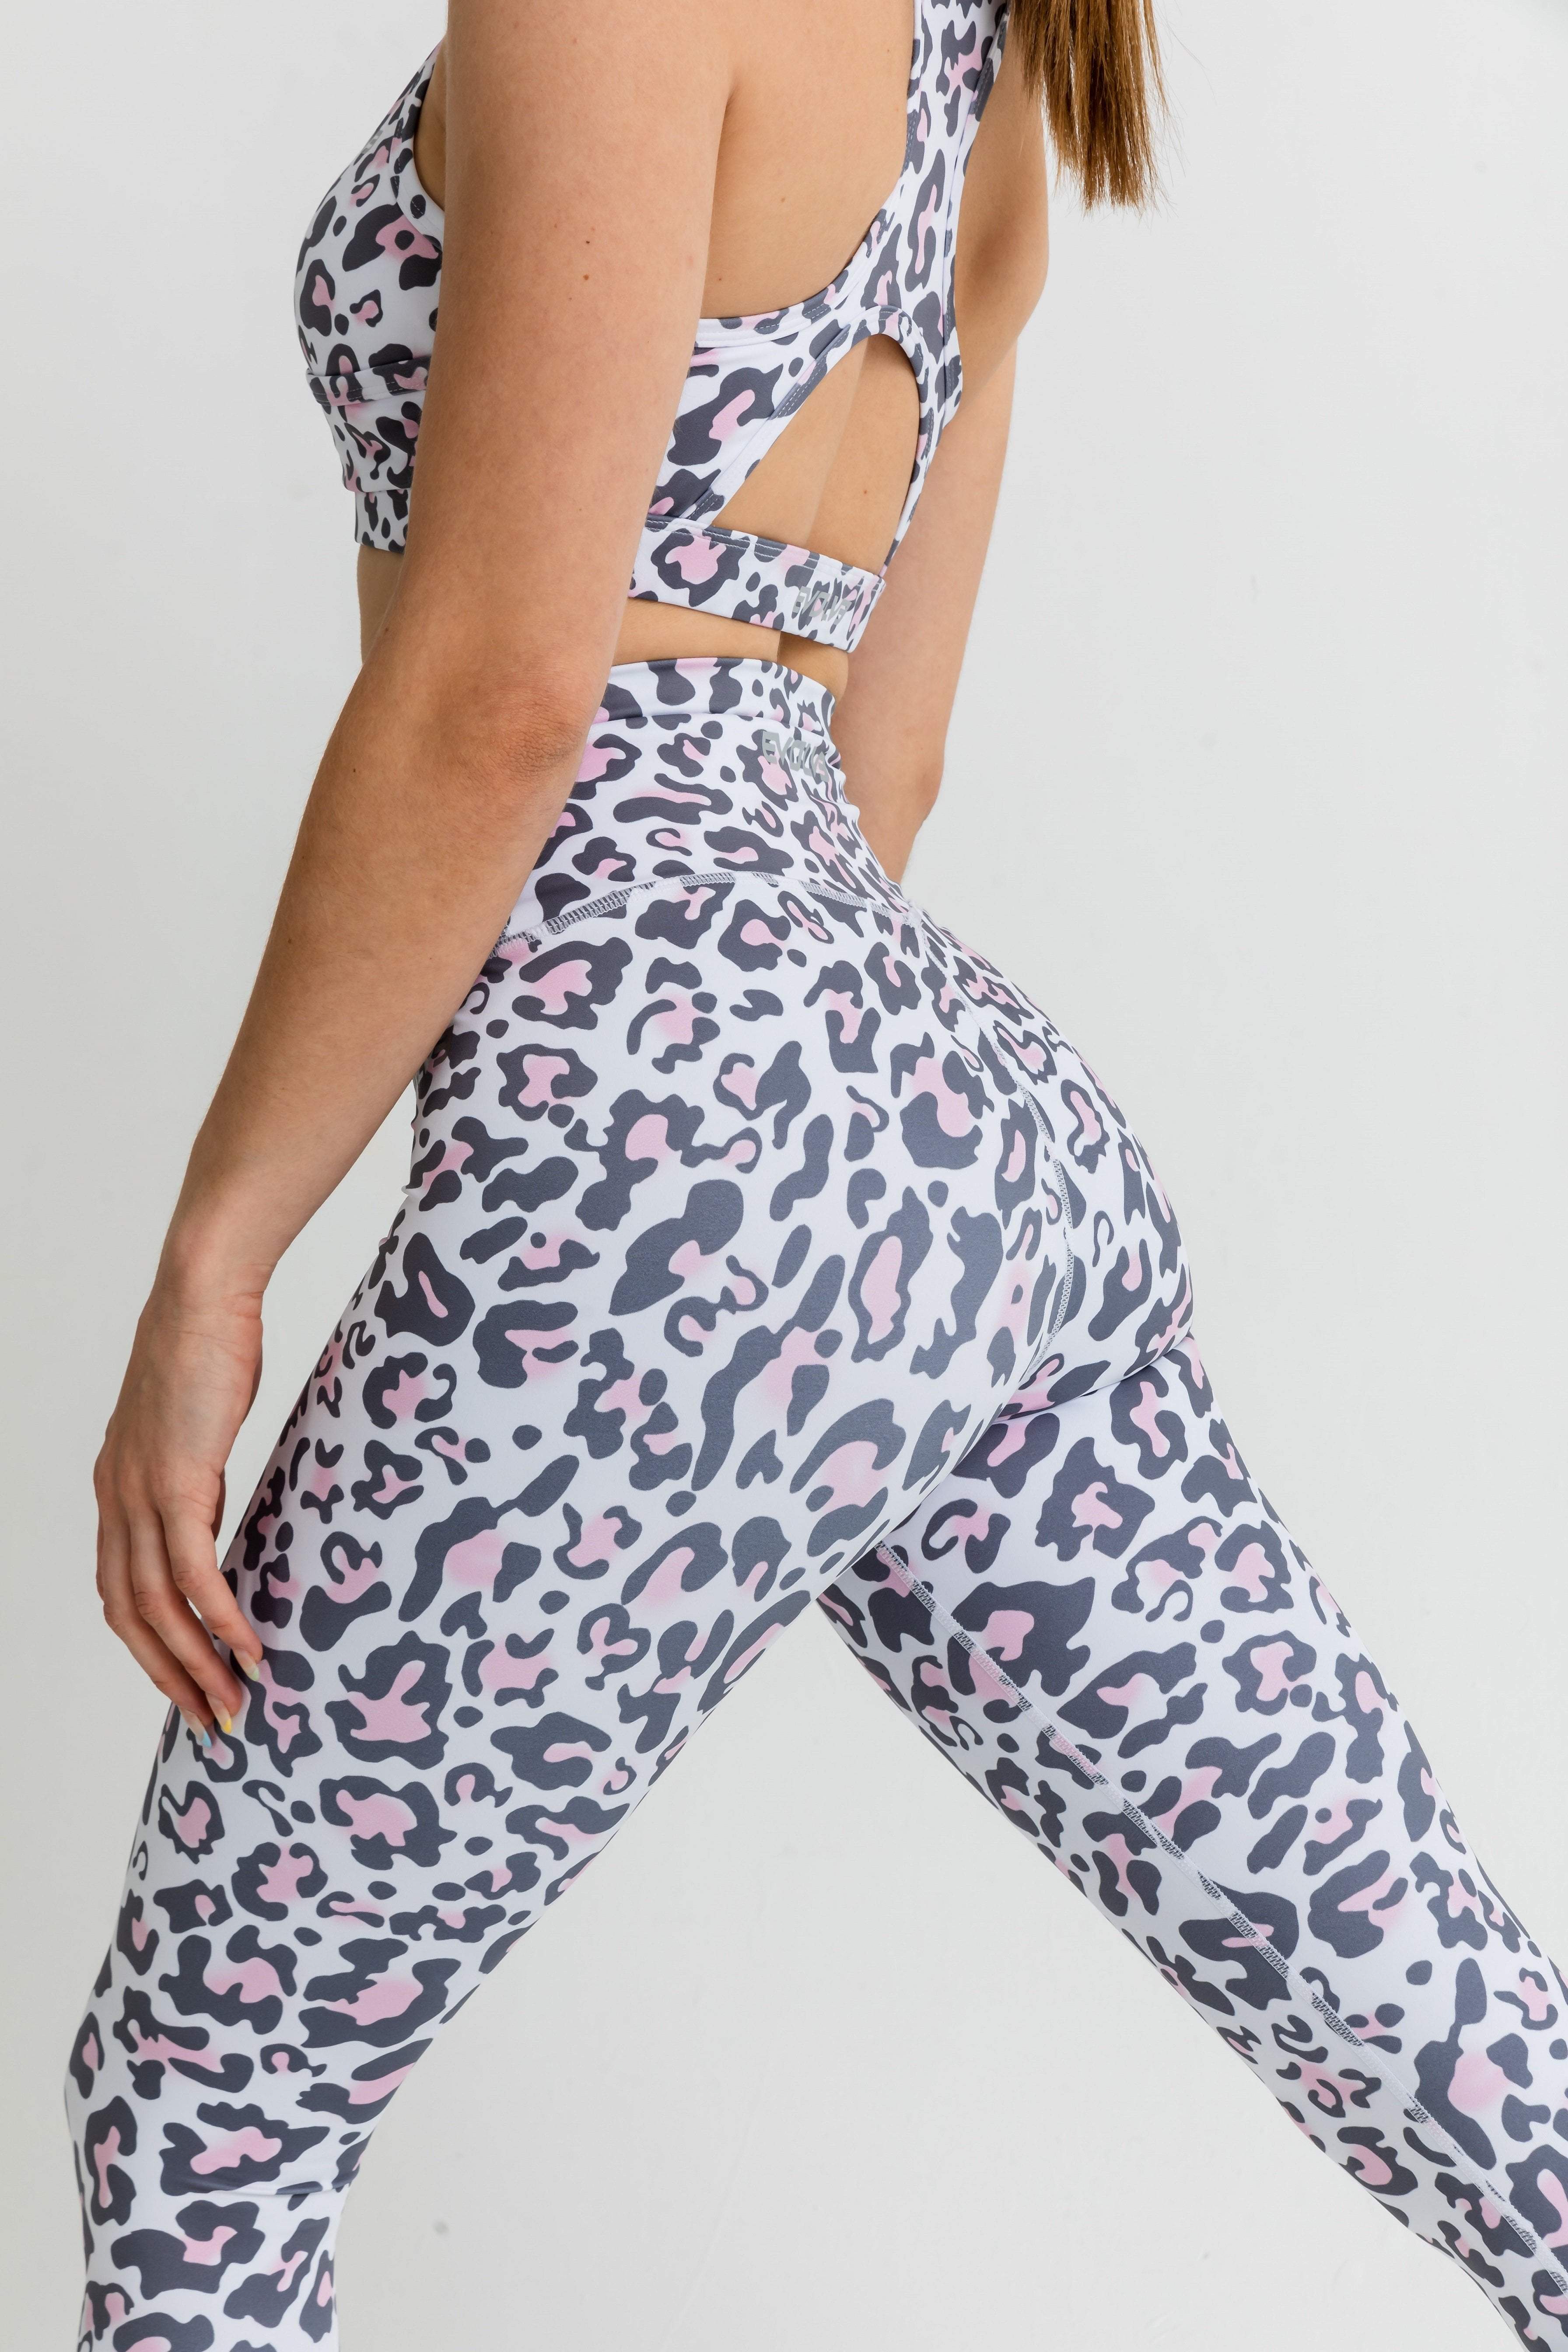 Evolve Apparel Leggings Jungle Leggings - Pink Leopard